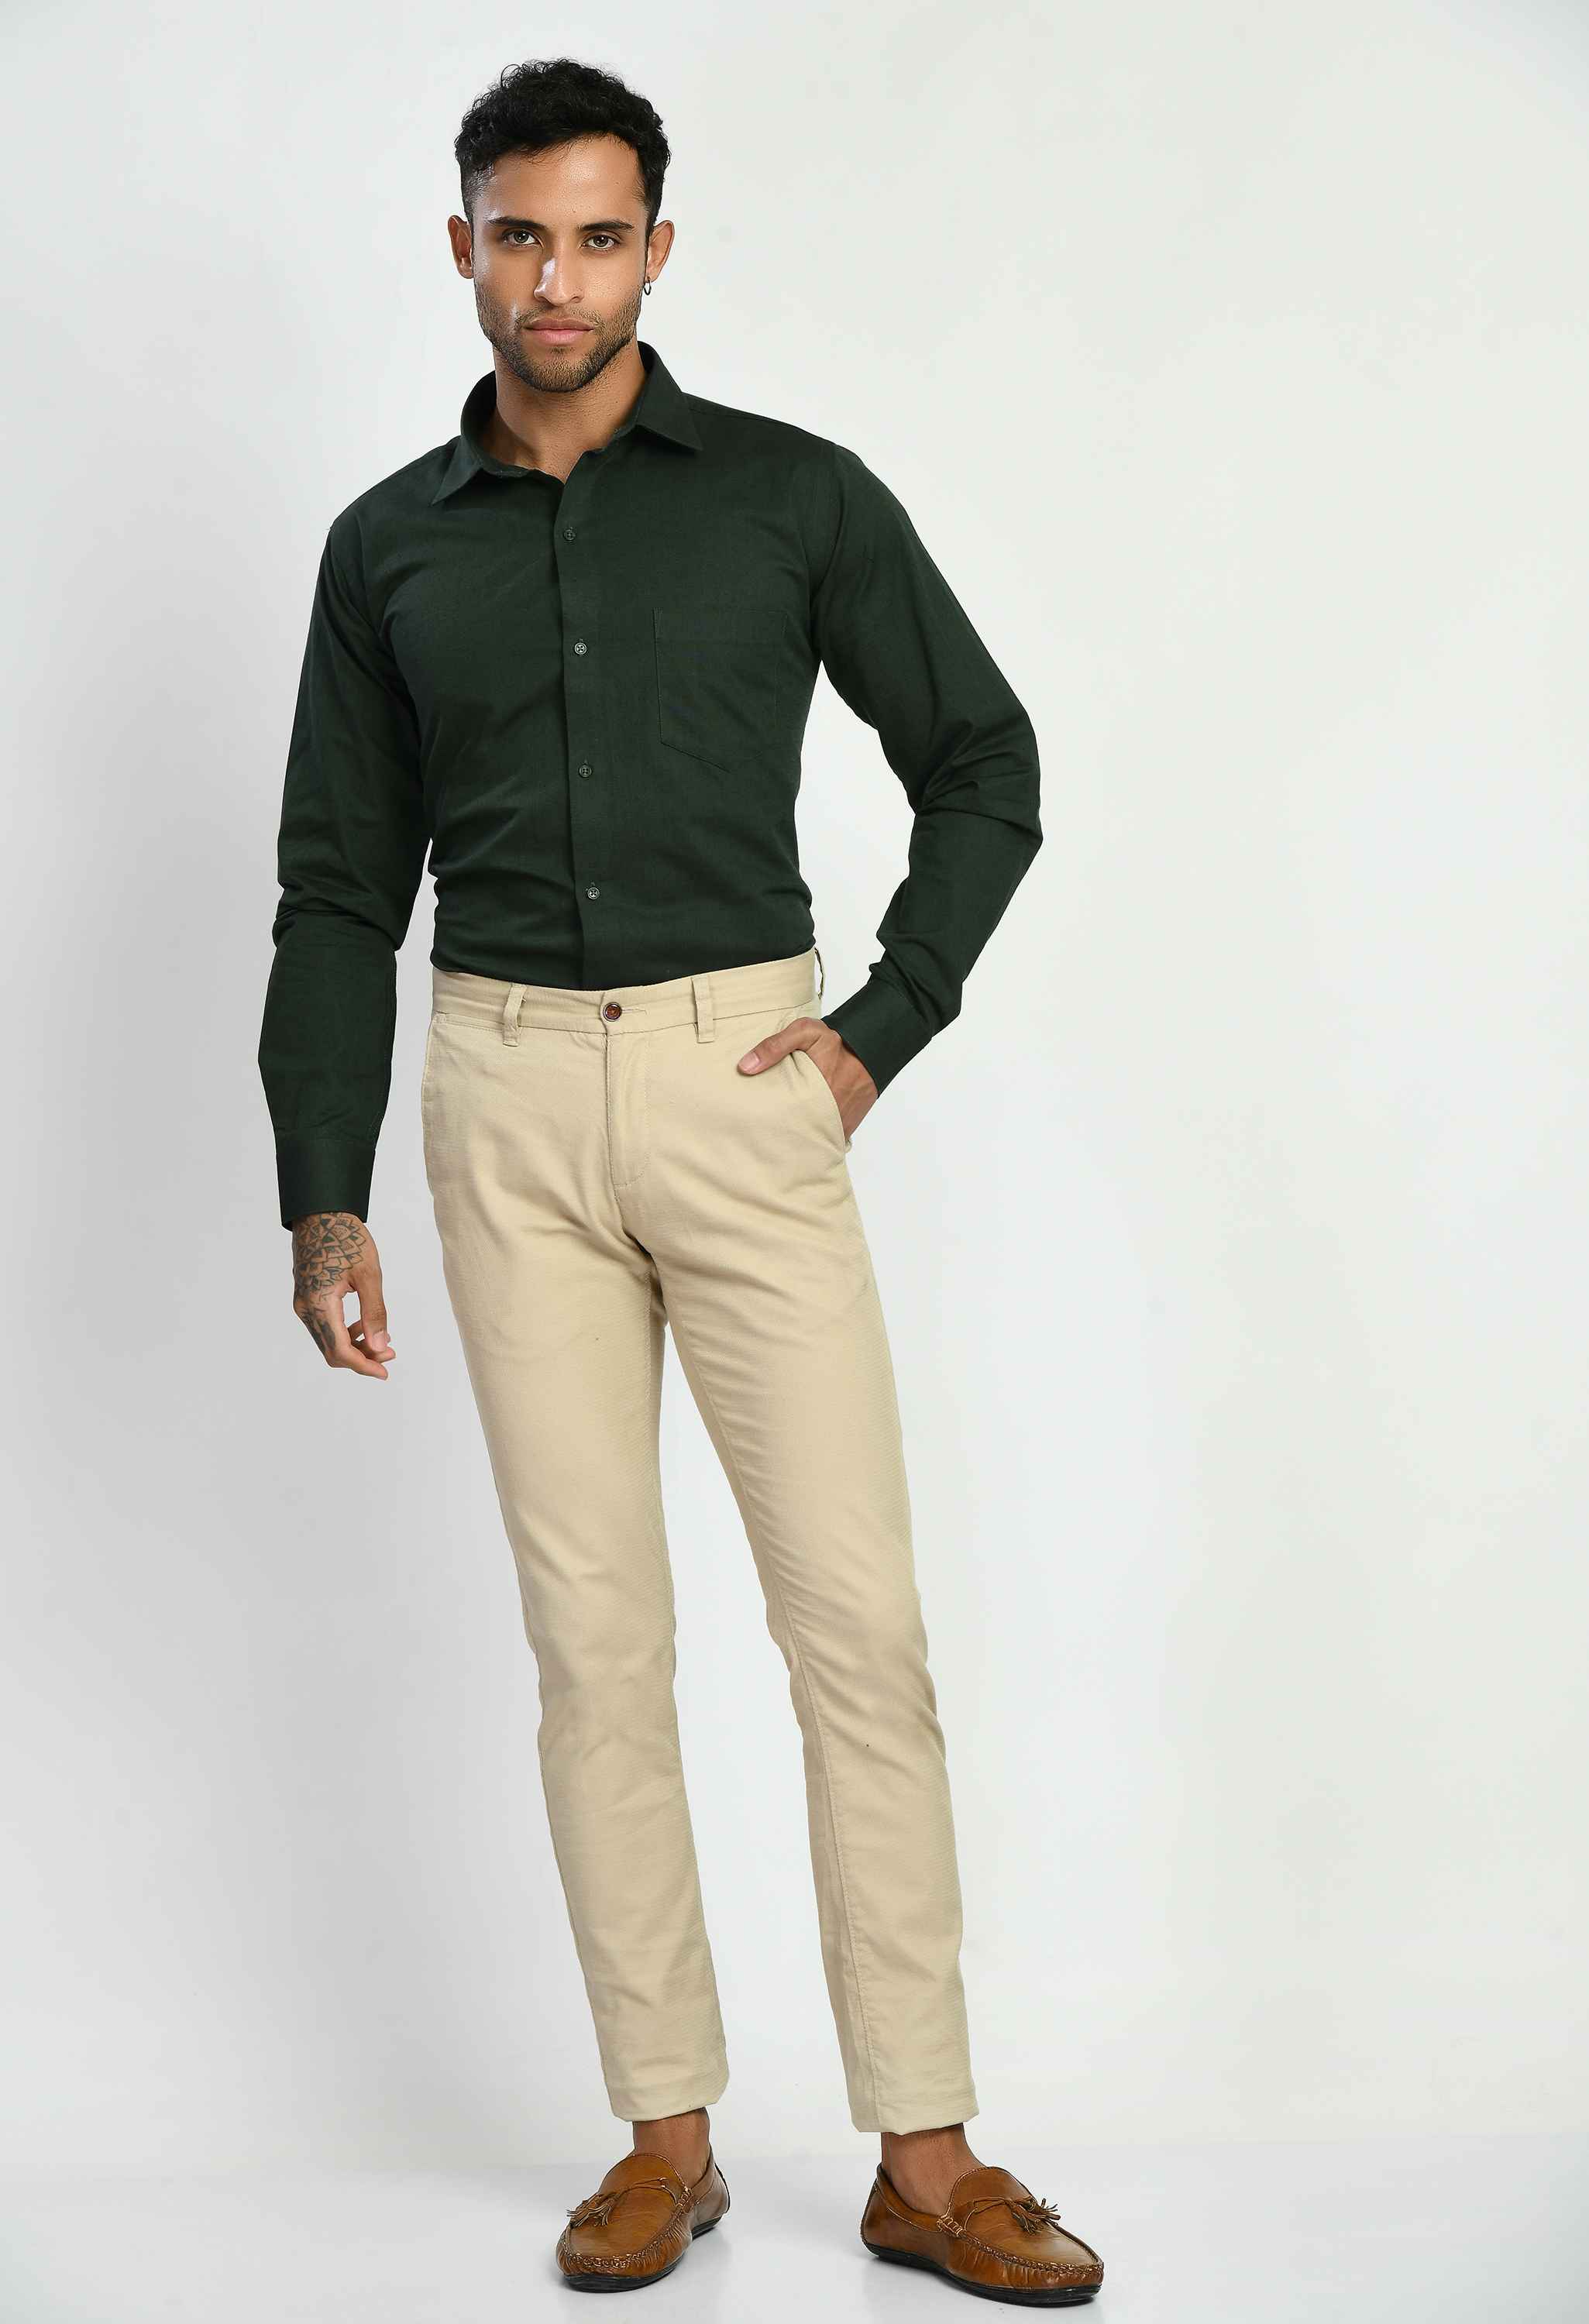 Men's Pine Green Spread Collar Solid Formal Shirt